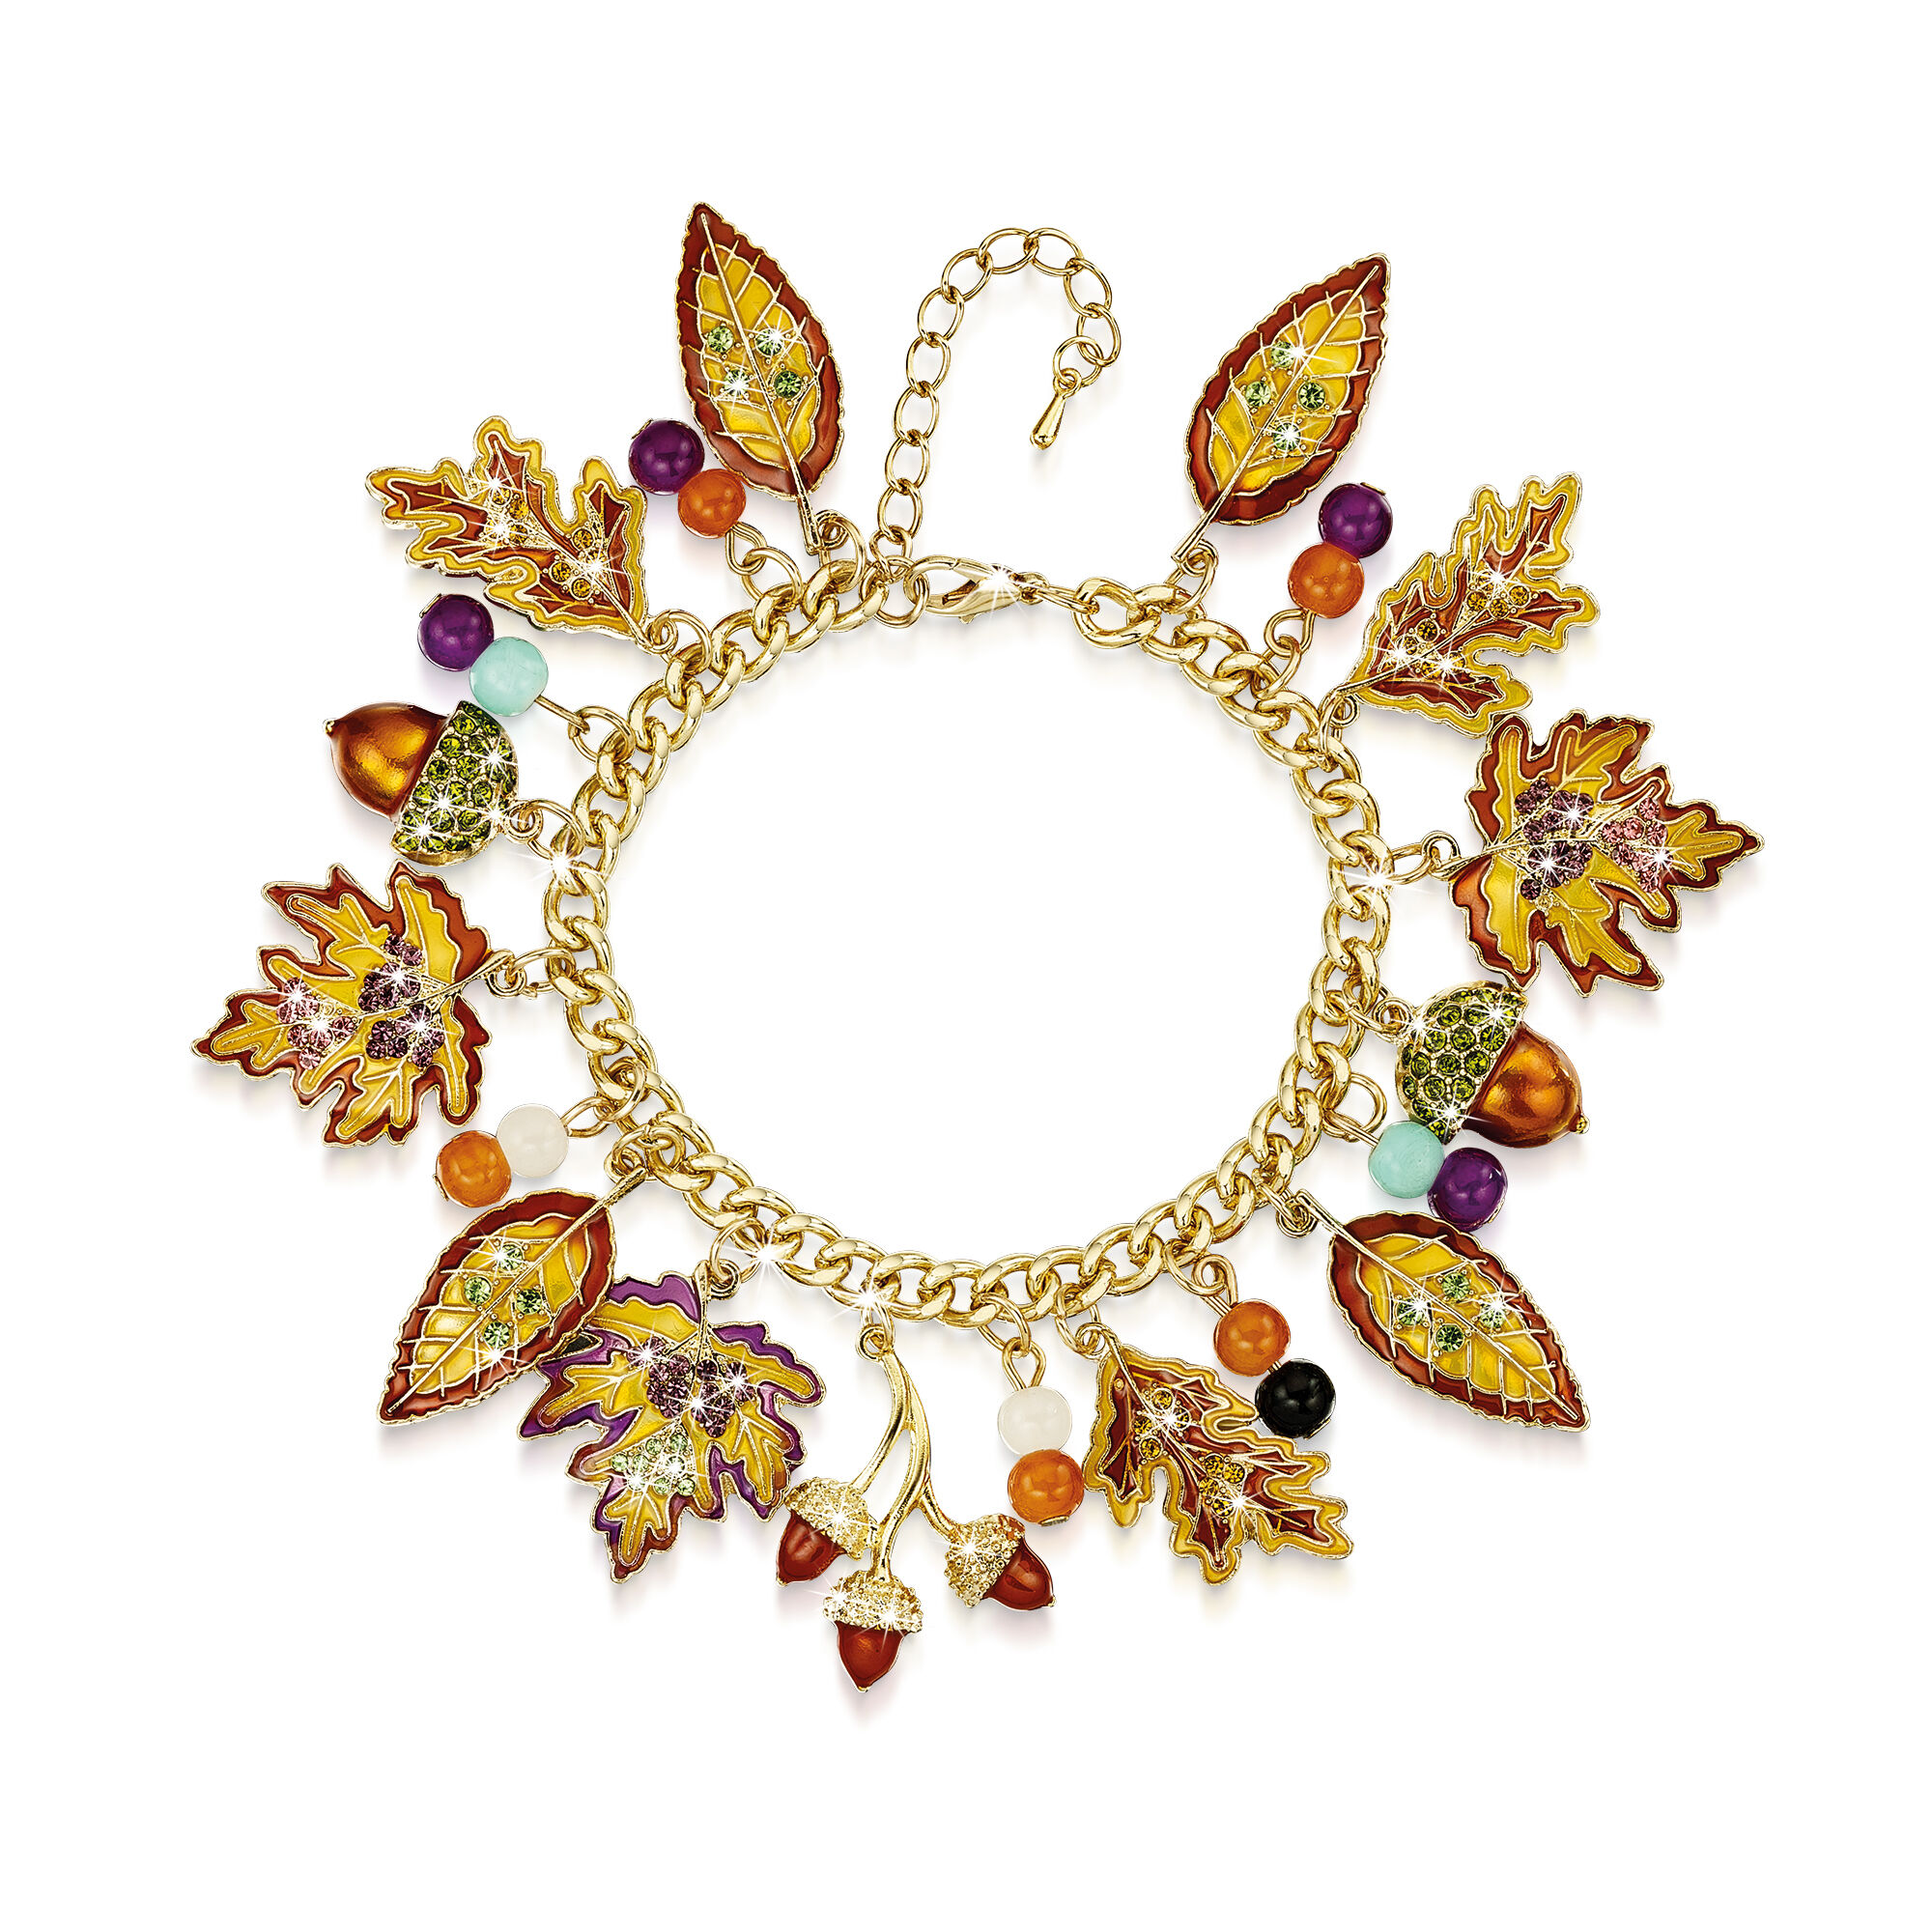 Autumn leaf bracelet Boho , hippie style adjus... - Folksy